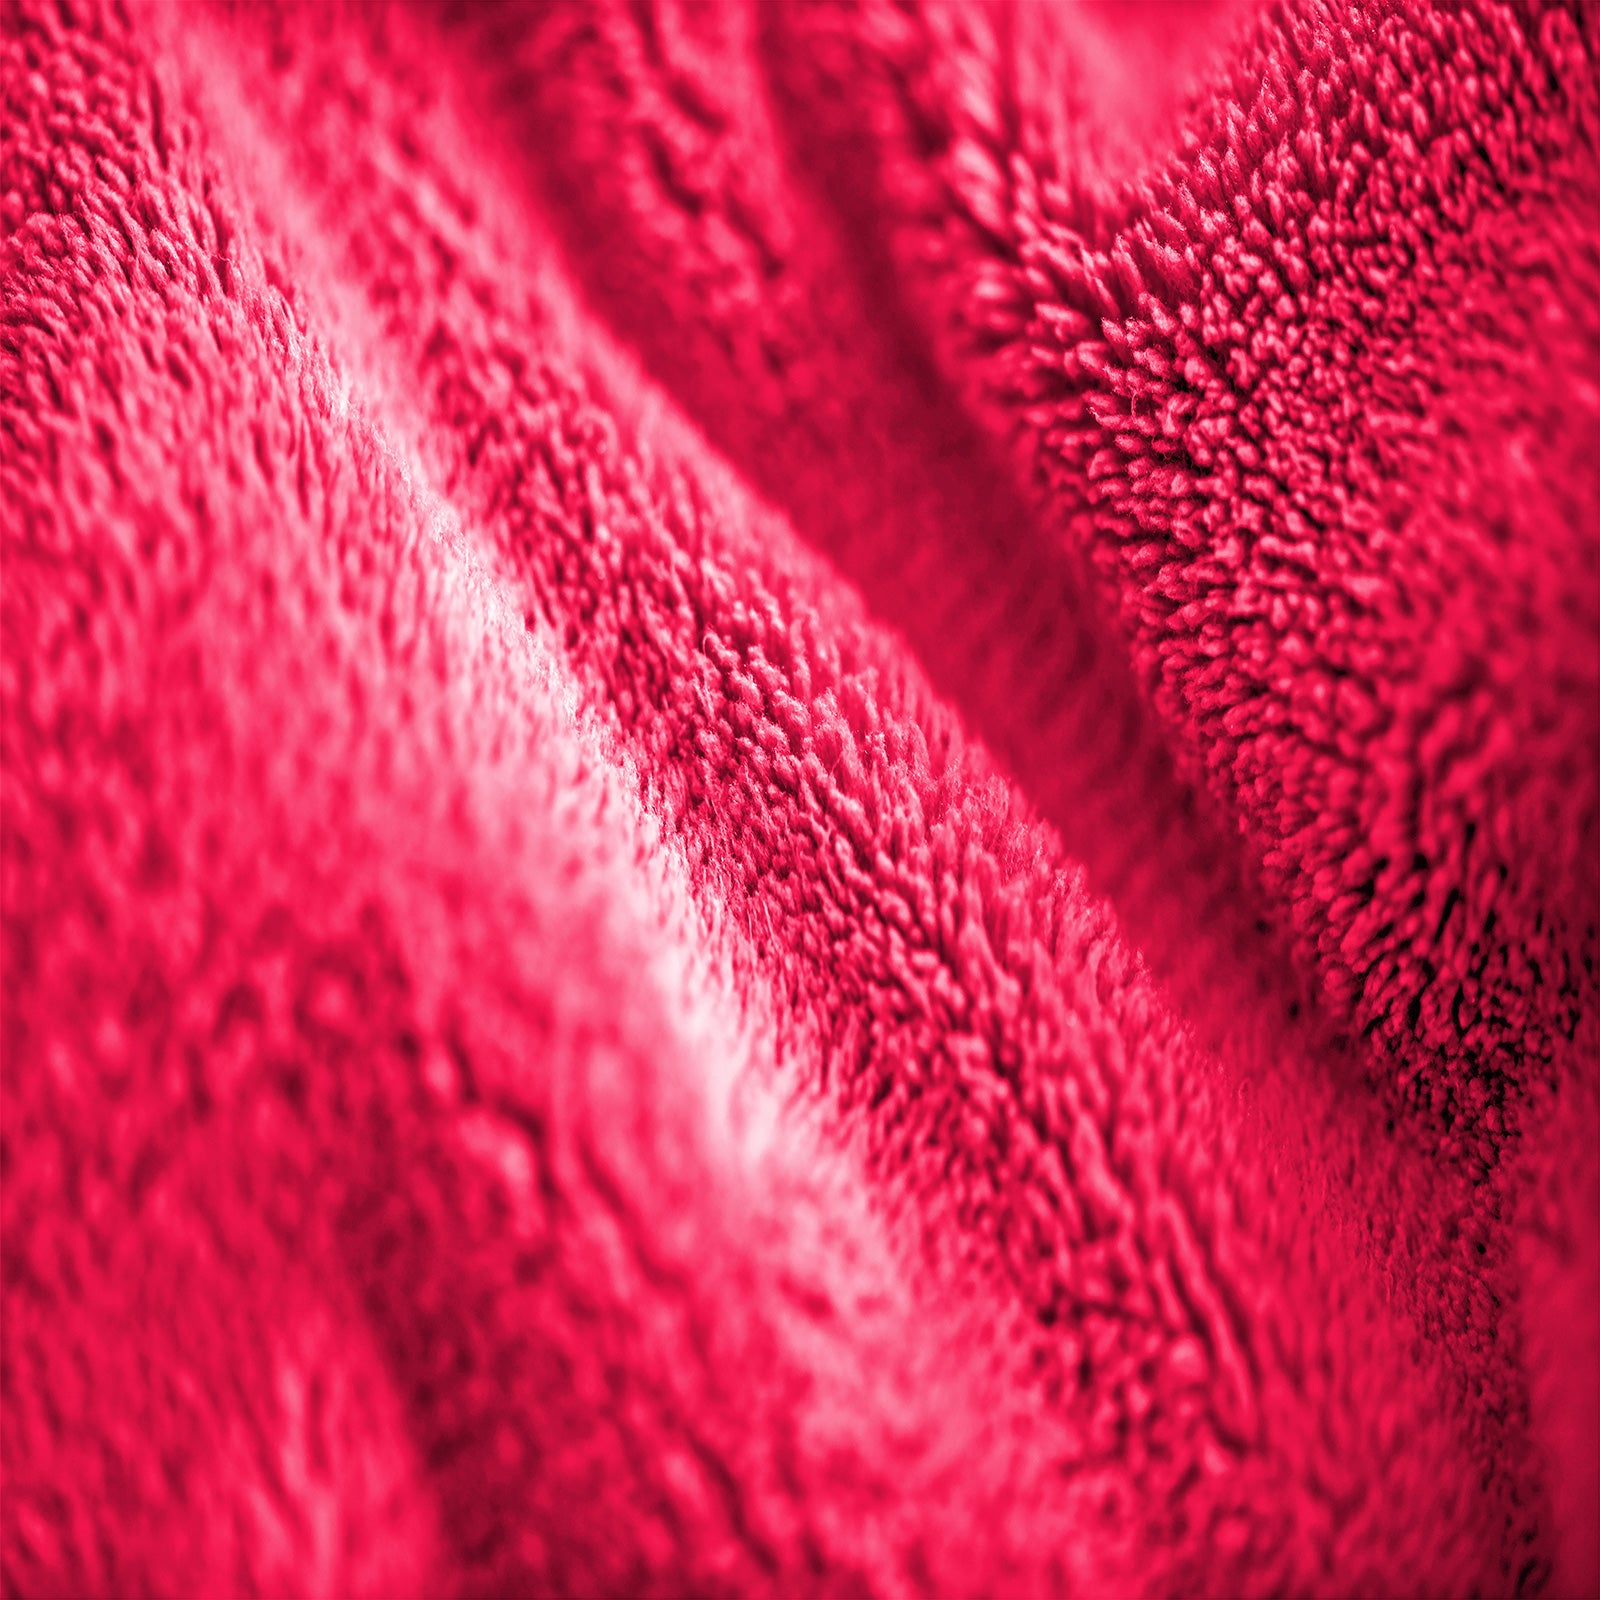 Royal Comfort Plush Rose Pink Blanket - BM House & Garden